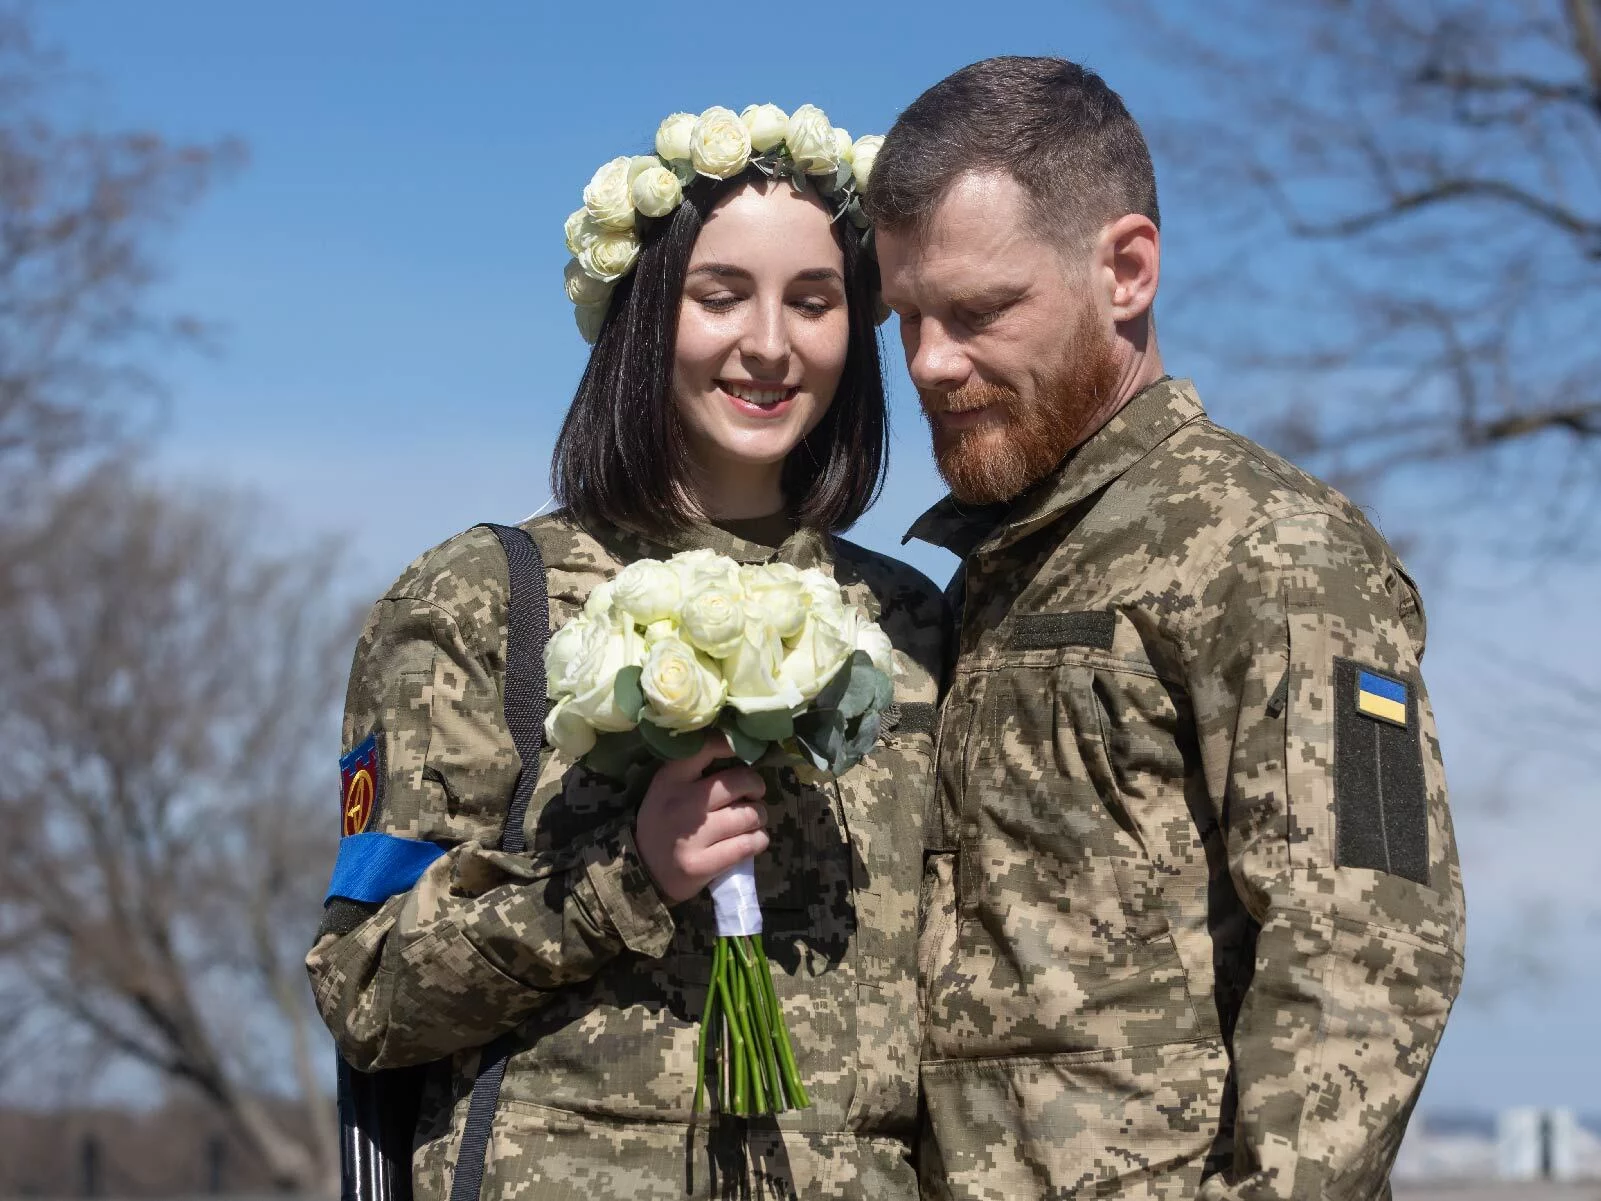 A Military wedding ceremony